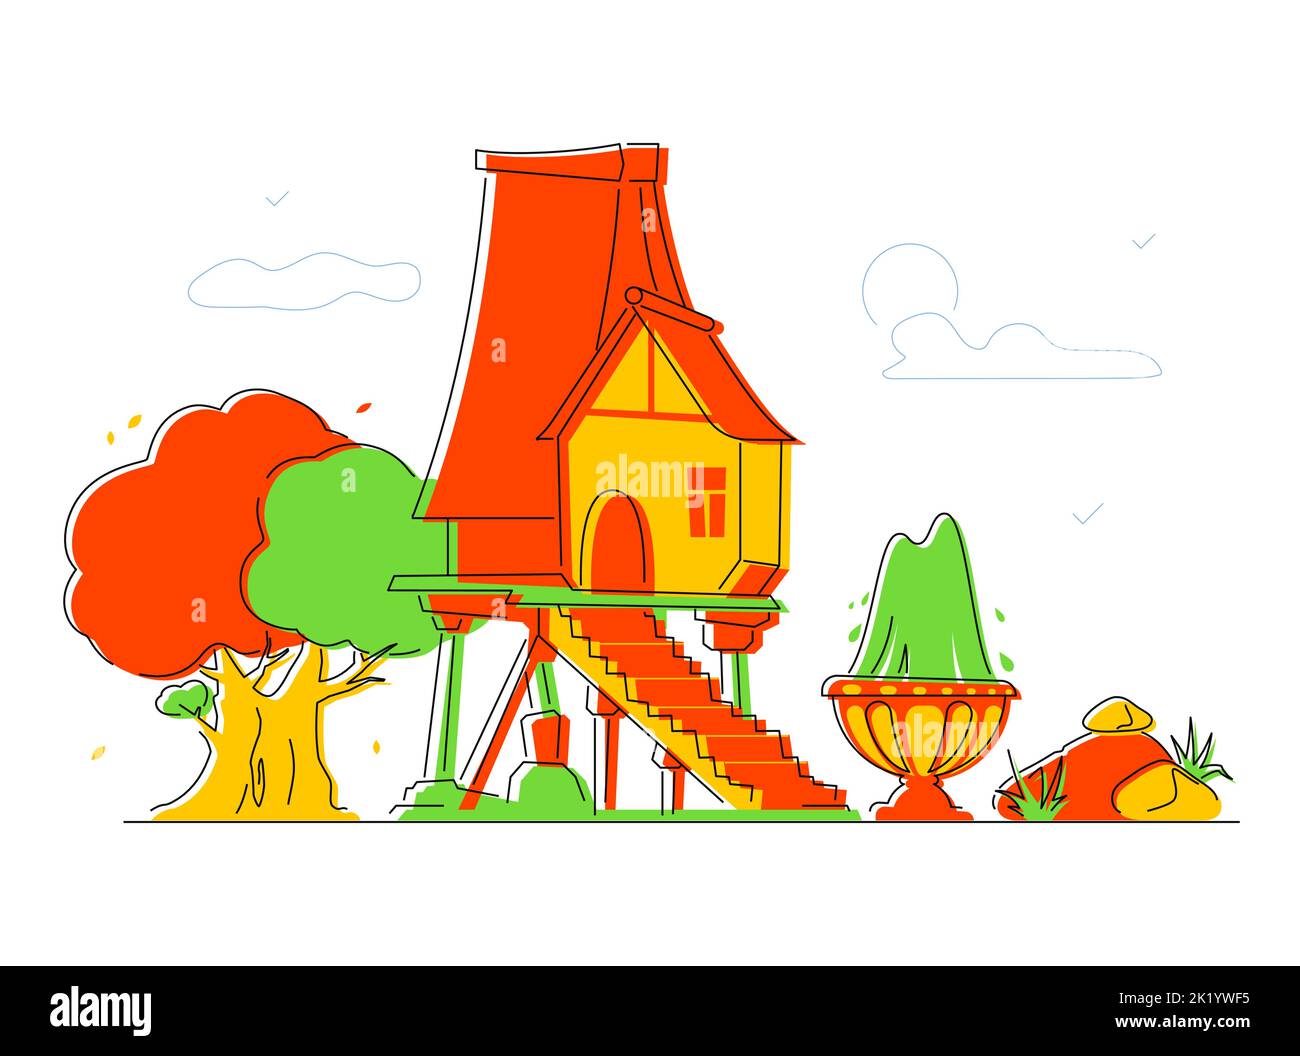 Peasant house on stilts - modern flat design style illustration Stock Vector